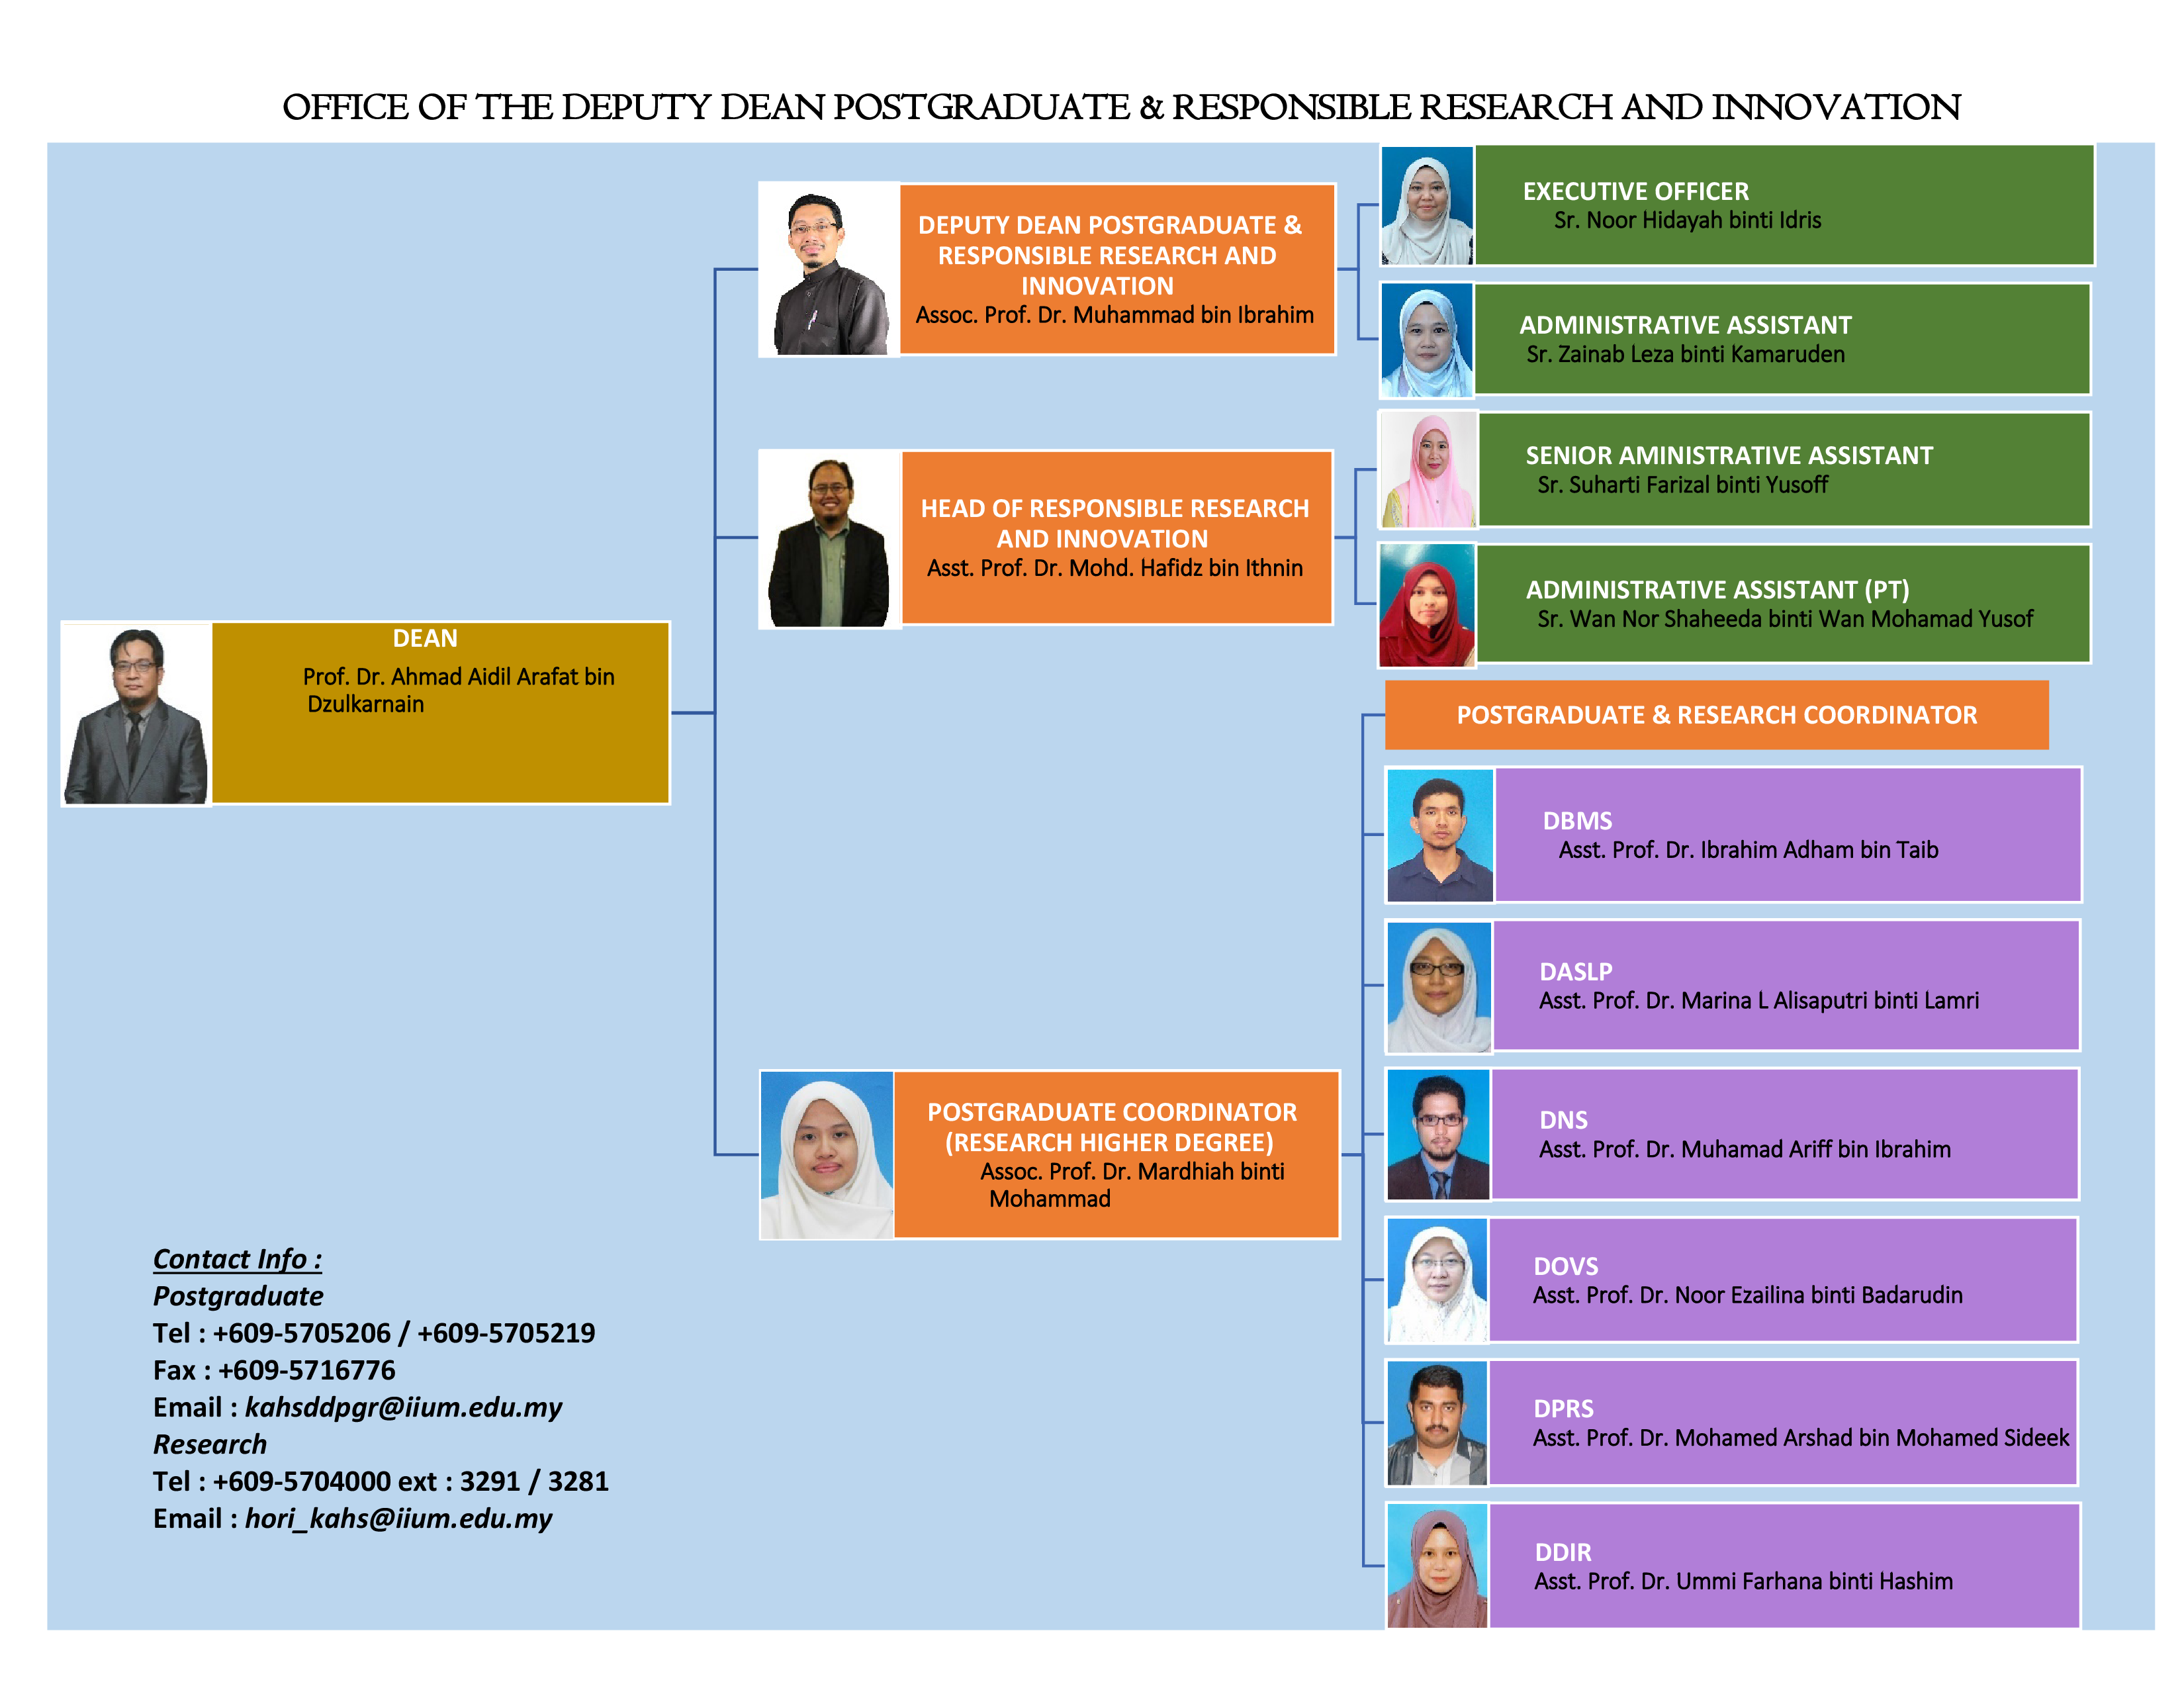 Organisational chart of Postgraduate offices